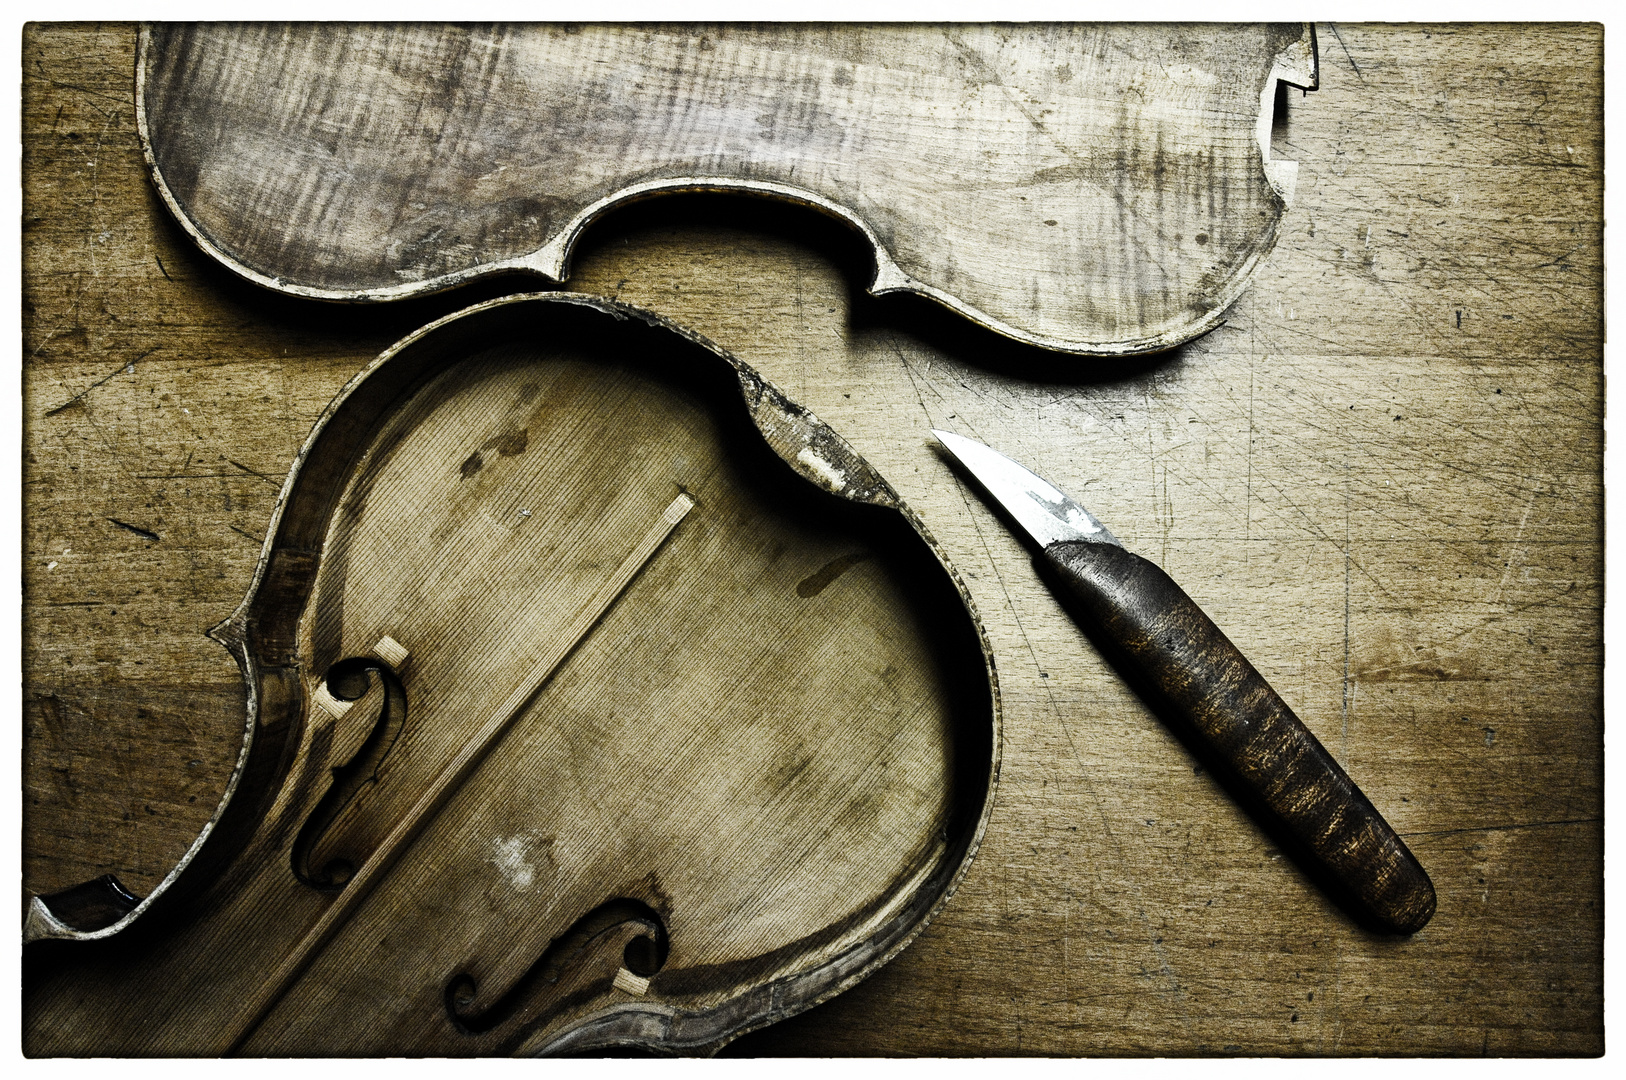 The violinmaker #13 reloaded